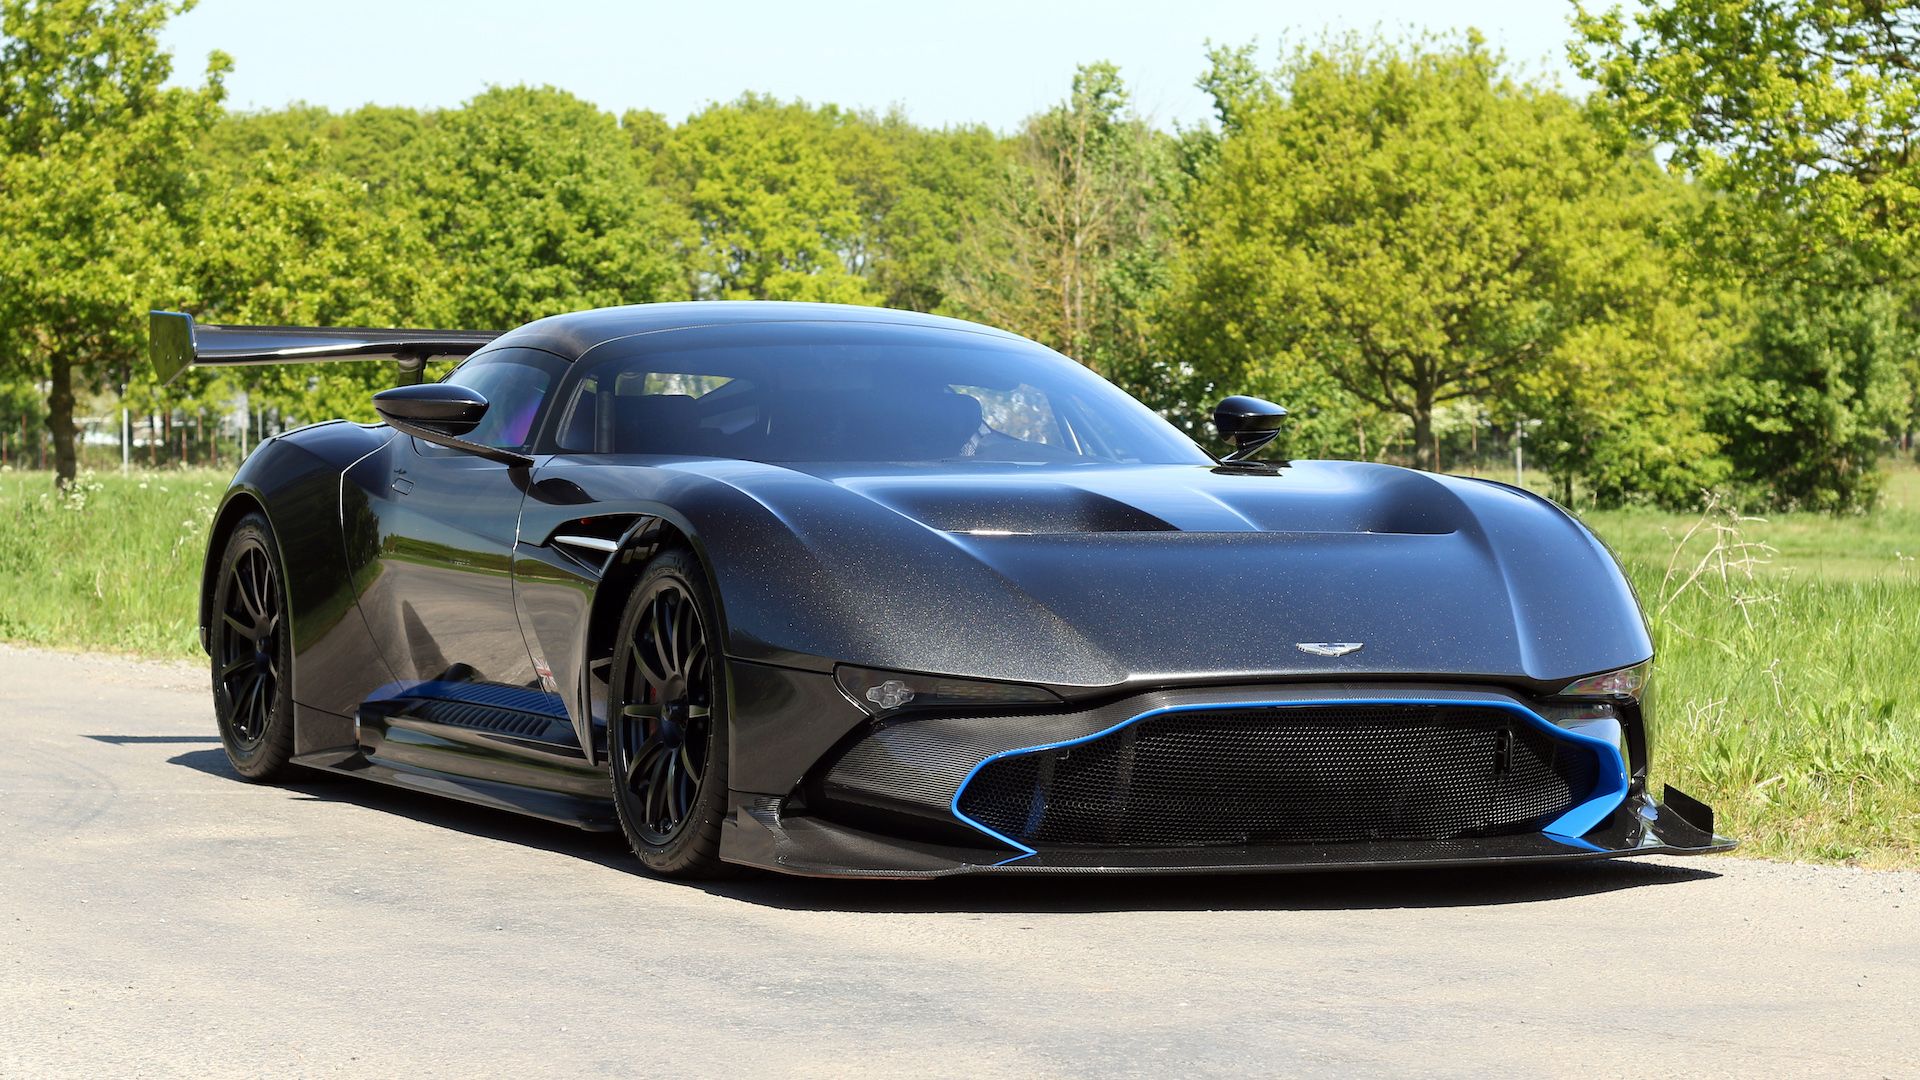 2016 Aston Martin Vulcan Photos and Info – News – Car and Driver